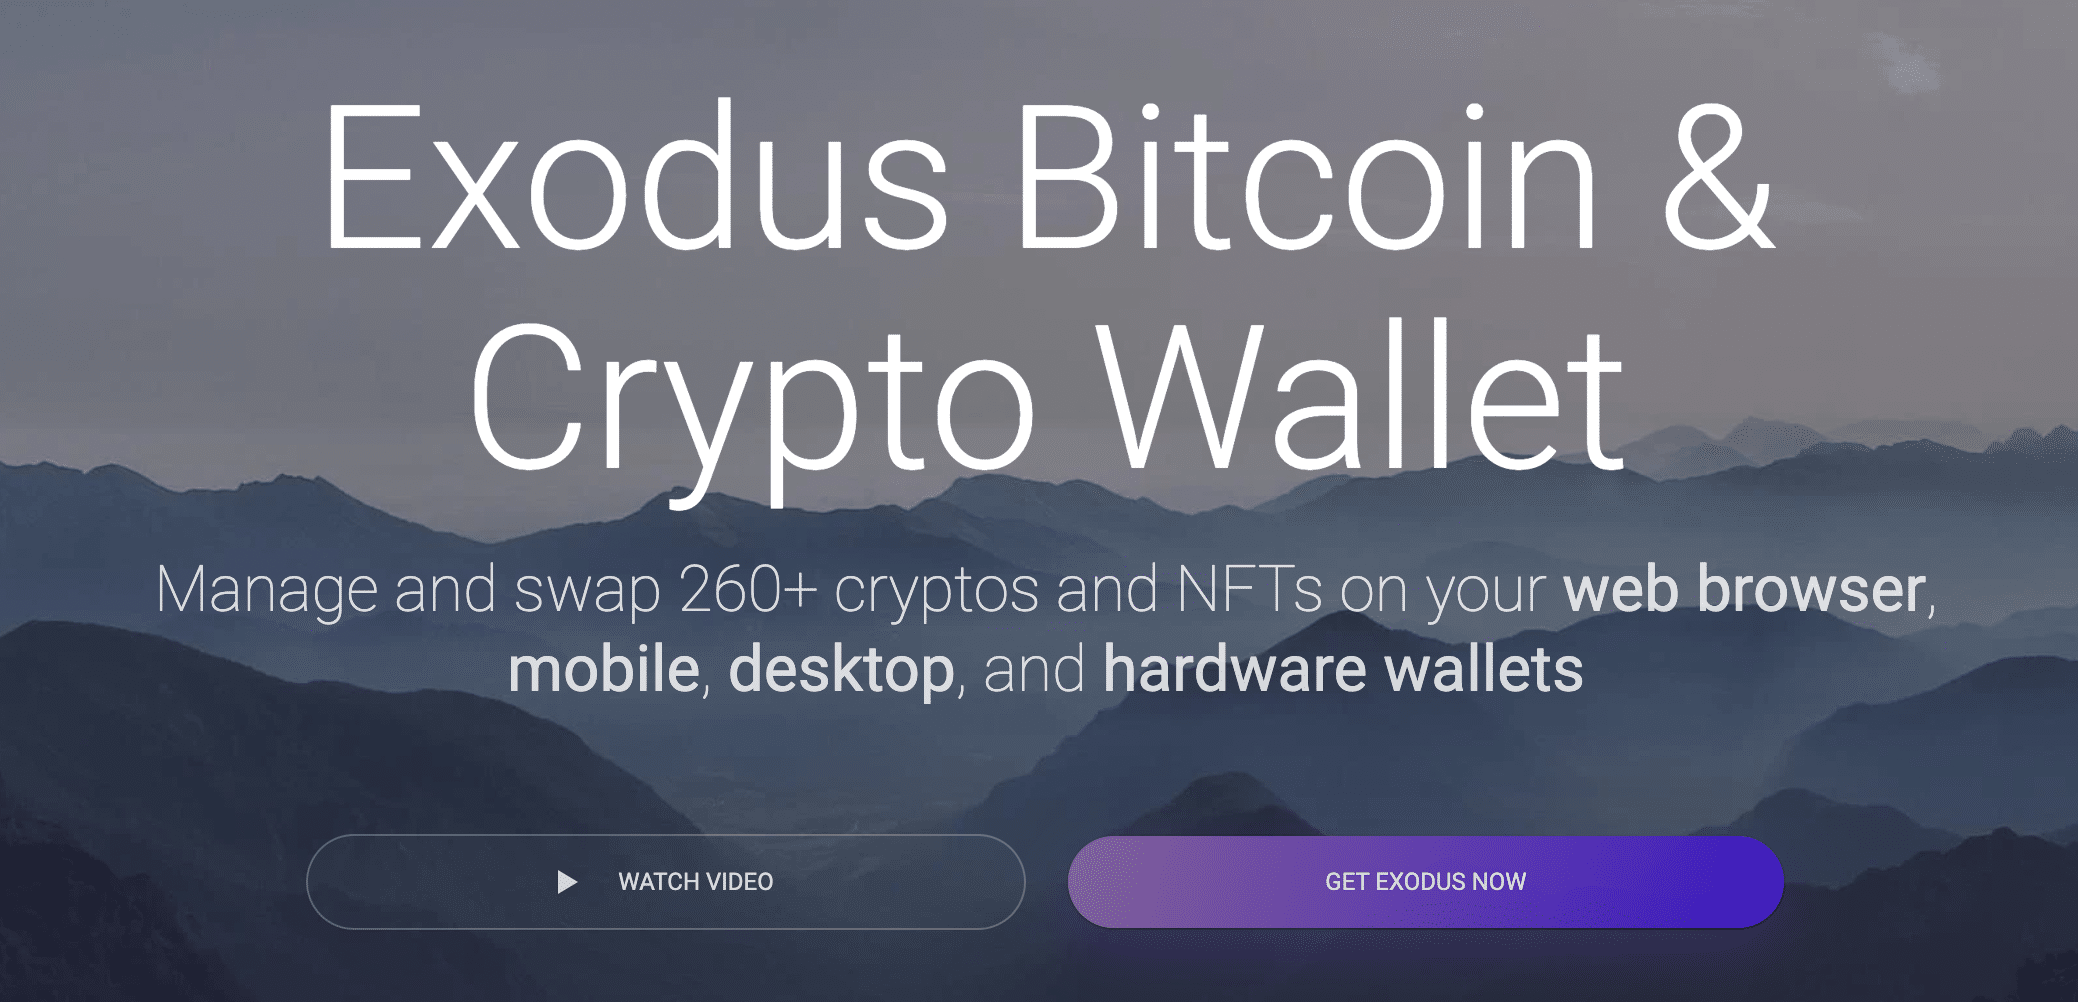 Best Crypto Wallet for Desktop & Mobile: Altcoin & Bitcoin